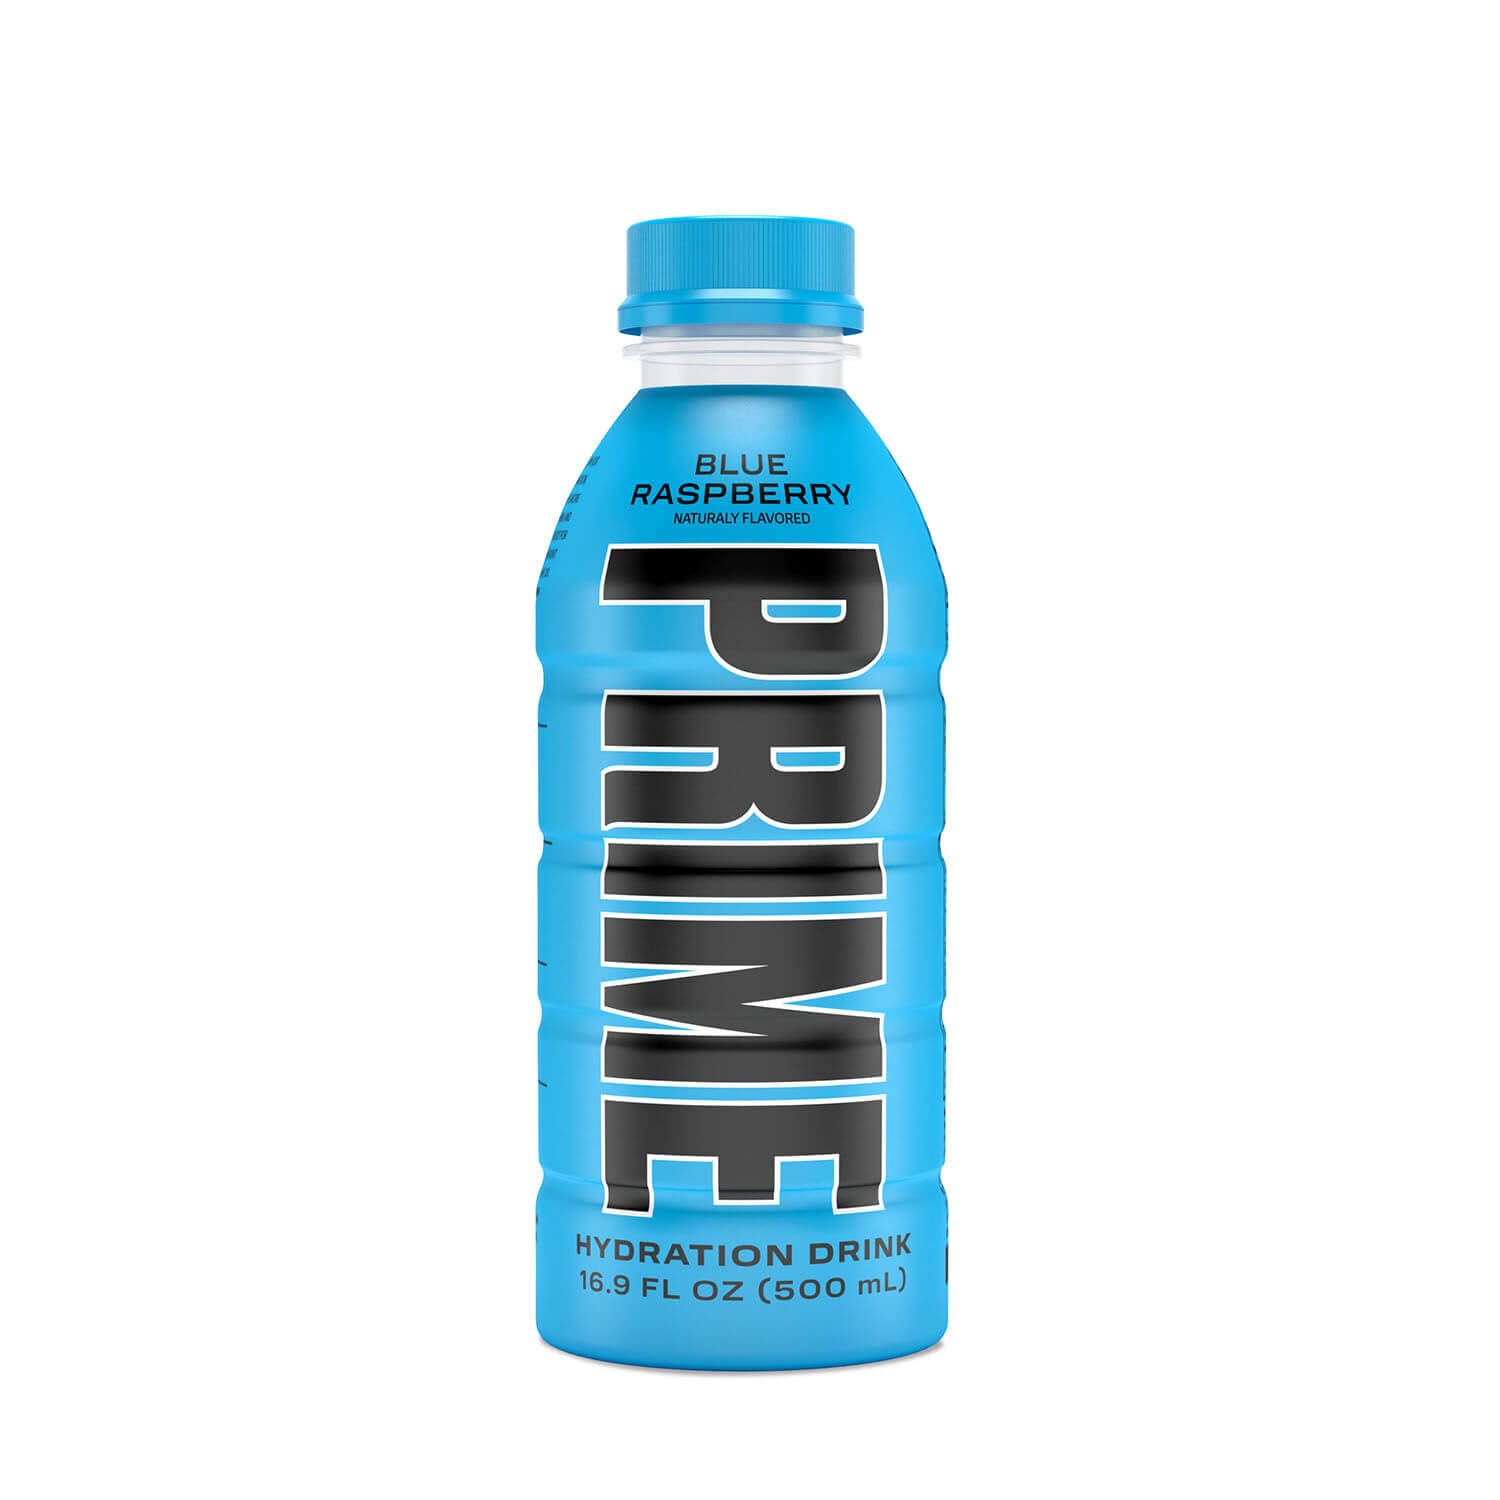 Buy prime hydration drink – MYS INTERNATIONAL TRADE CO.,LTD.